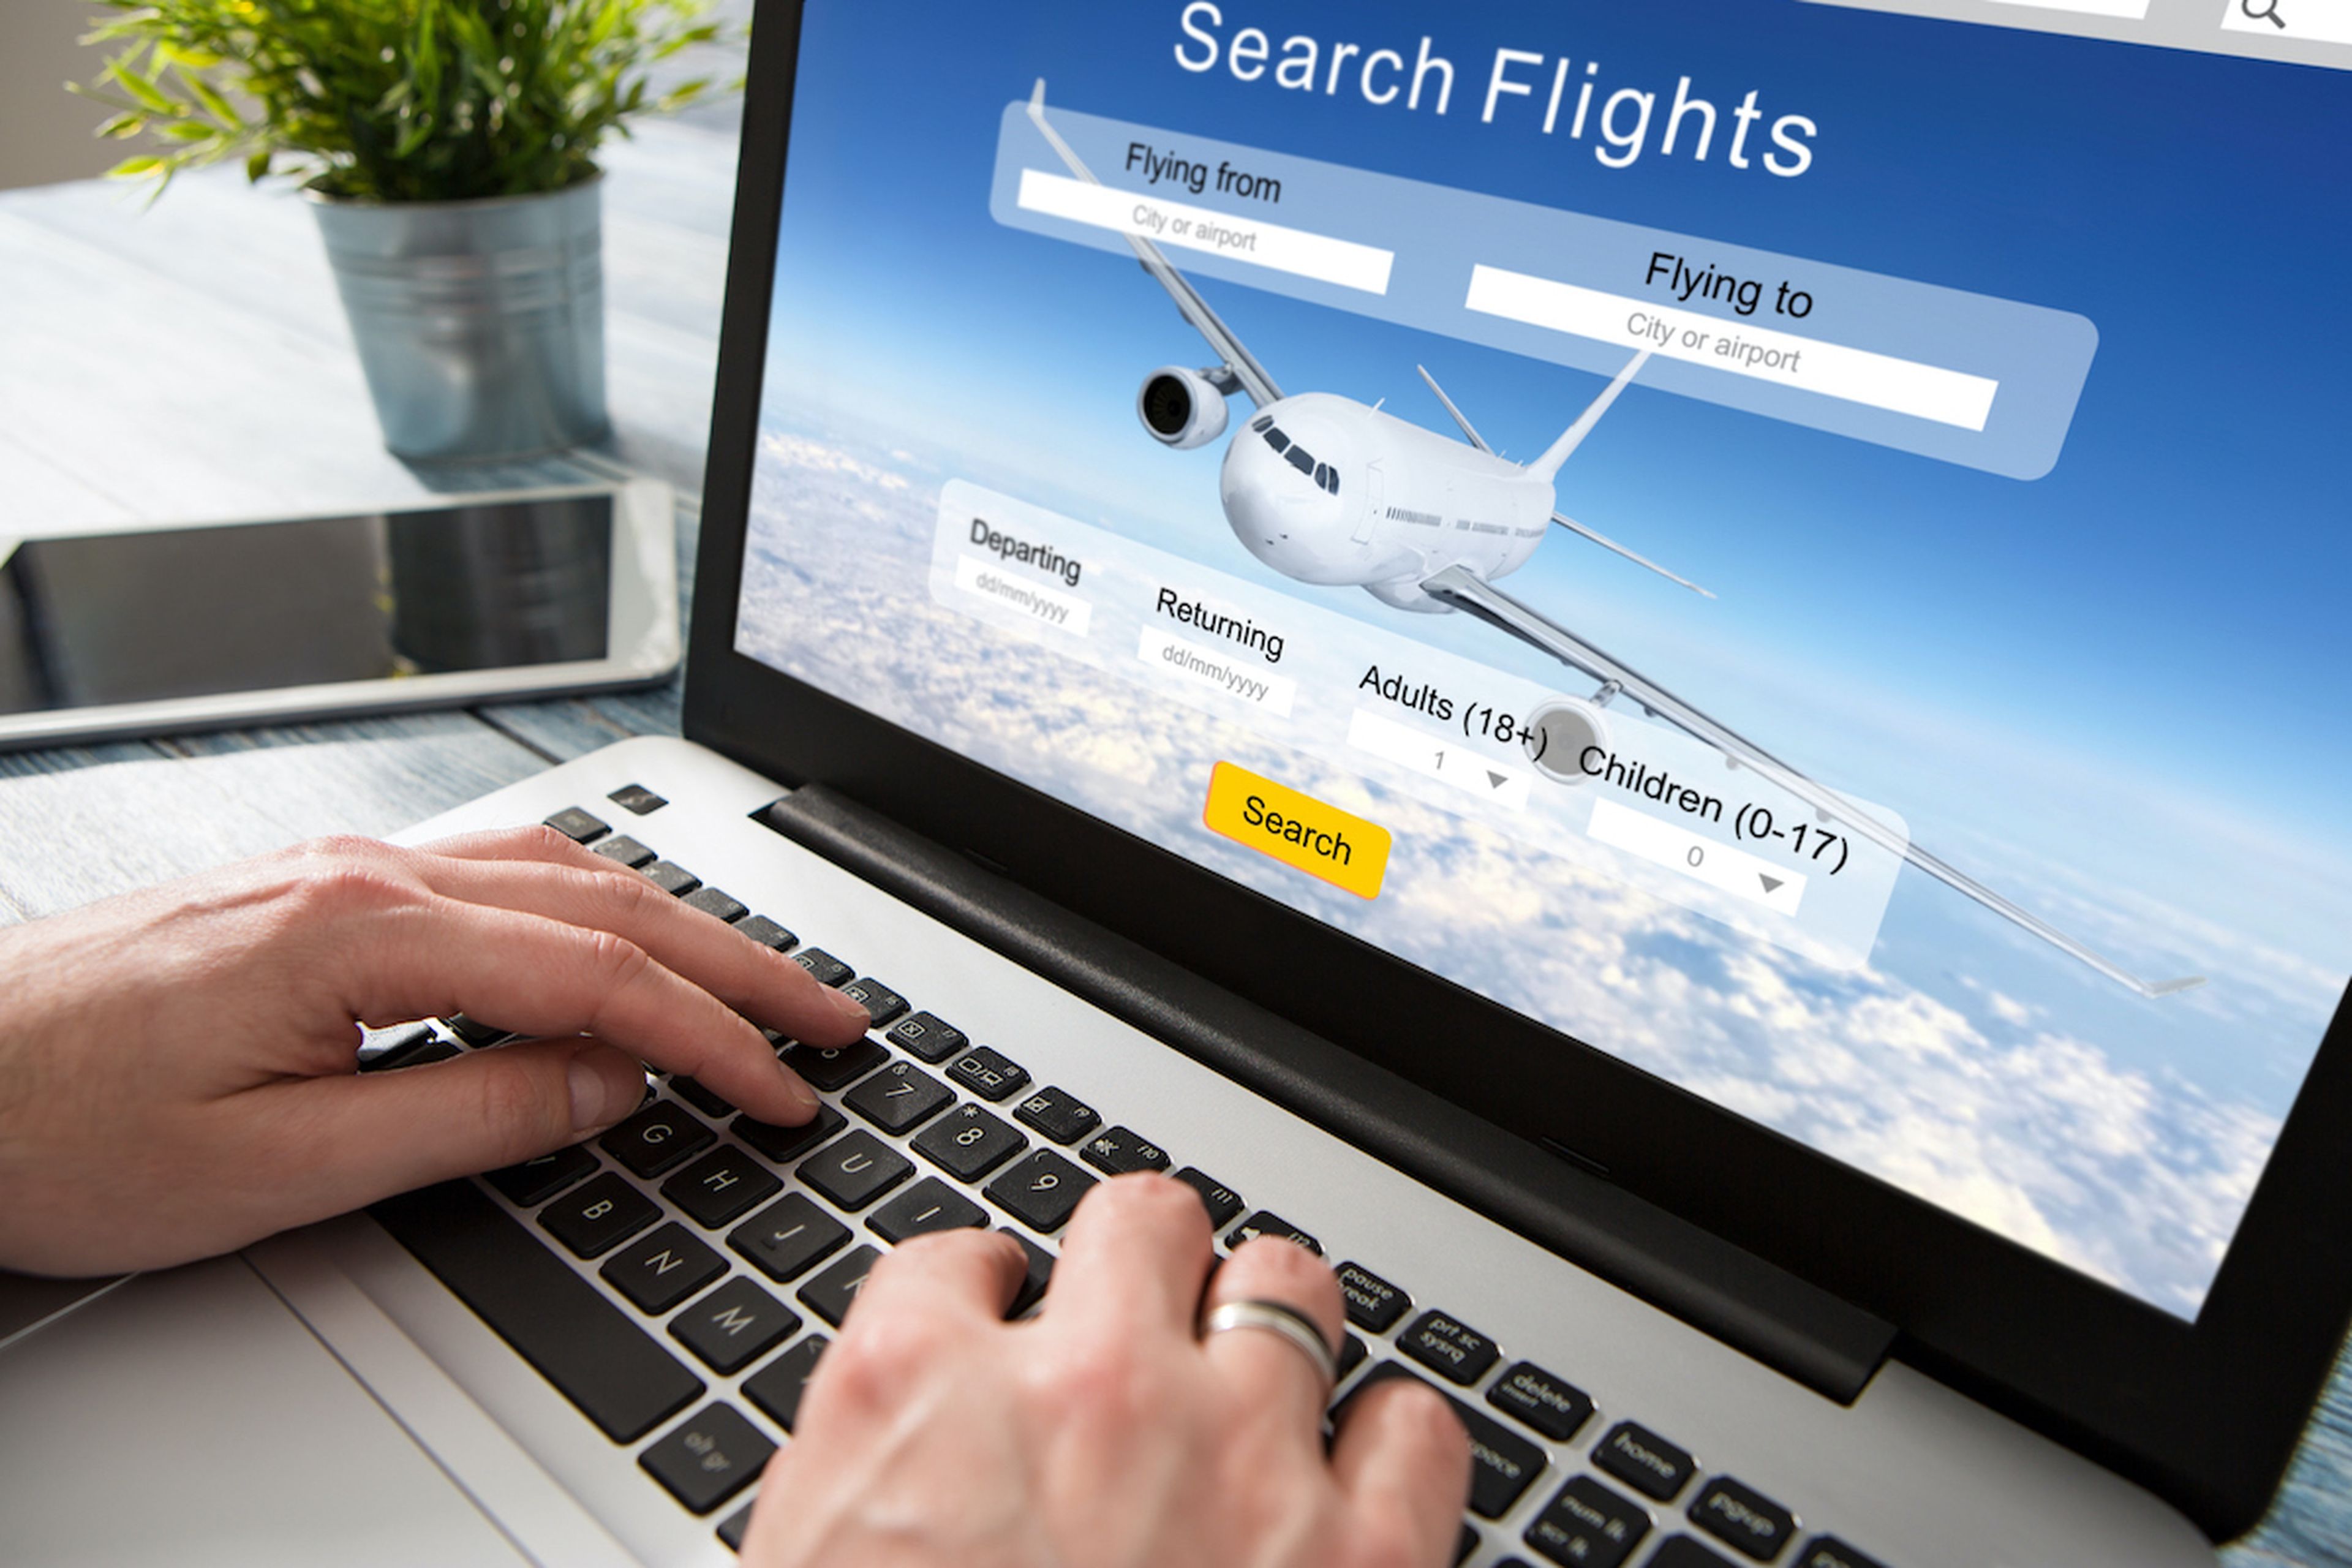 webs para encontrar vuelos baratos de | Computer Hoy